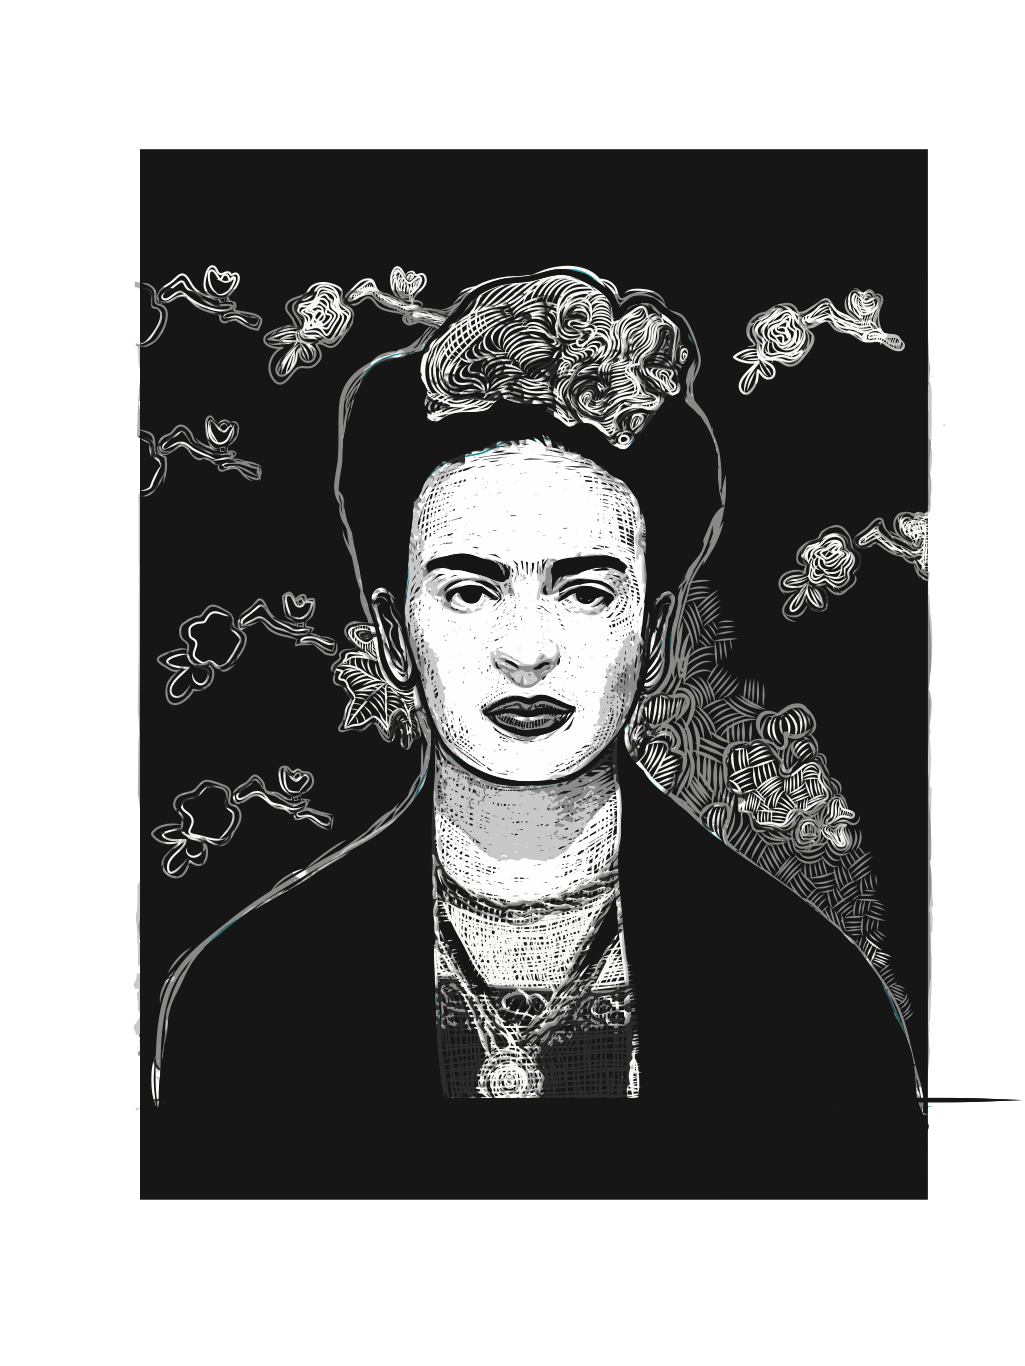 adobedraw frida artist hispanic feminist portrait vector art mexico kahlo diego rivera